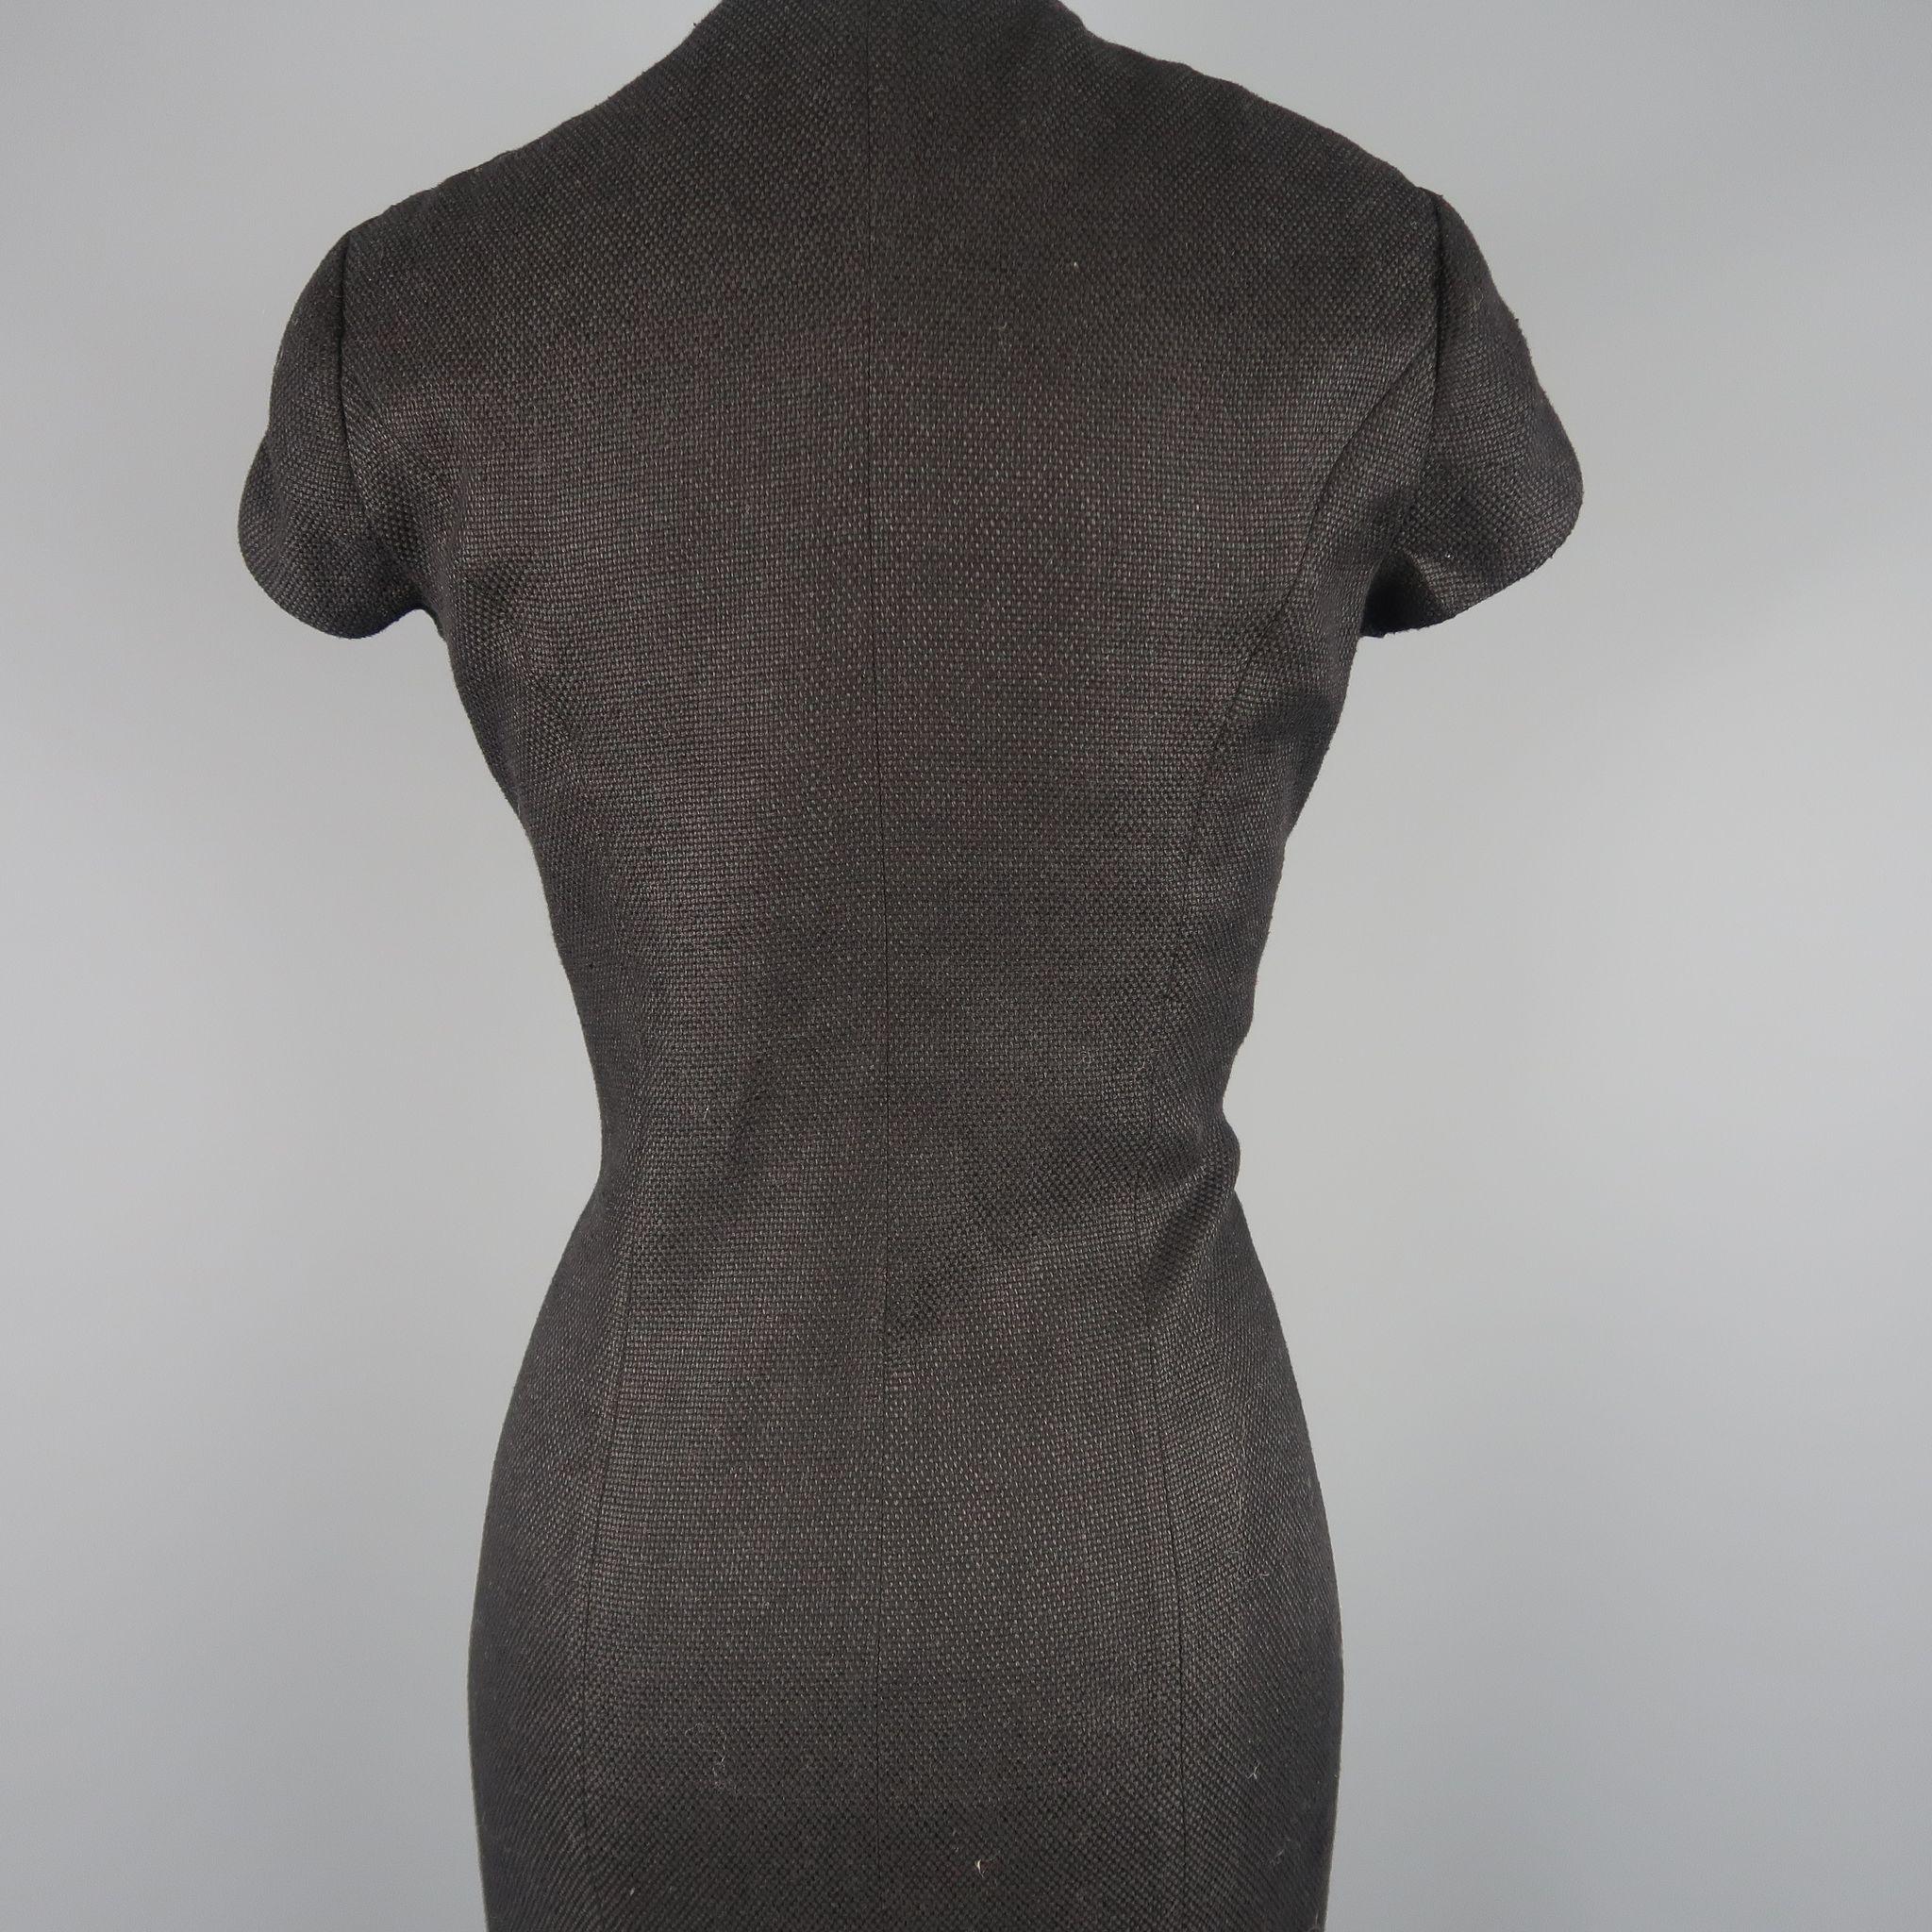 Women's RALPH LAUREN COLLECTION Size 8 Black Woven Linen Scoop Neck Dress